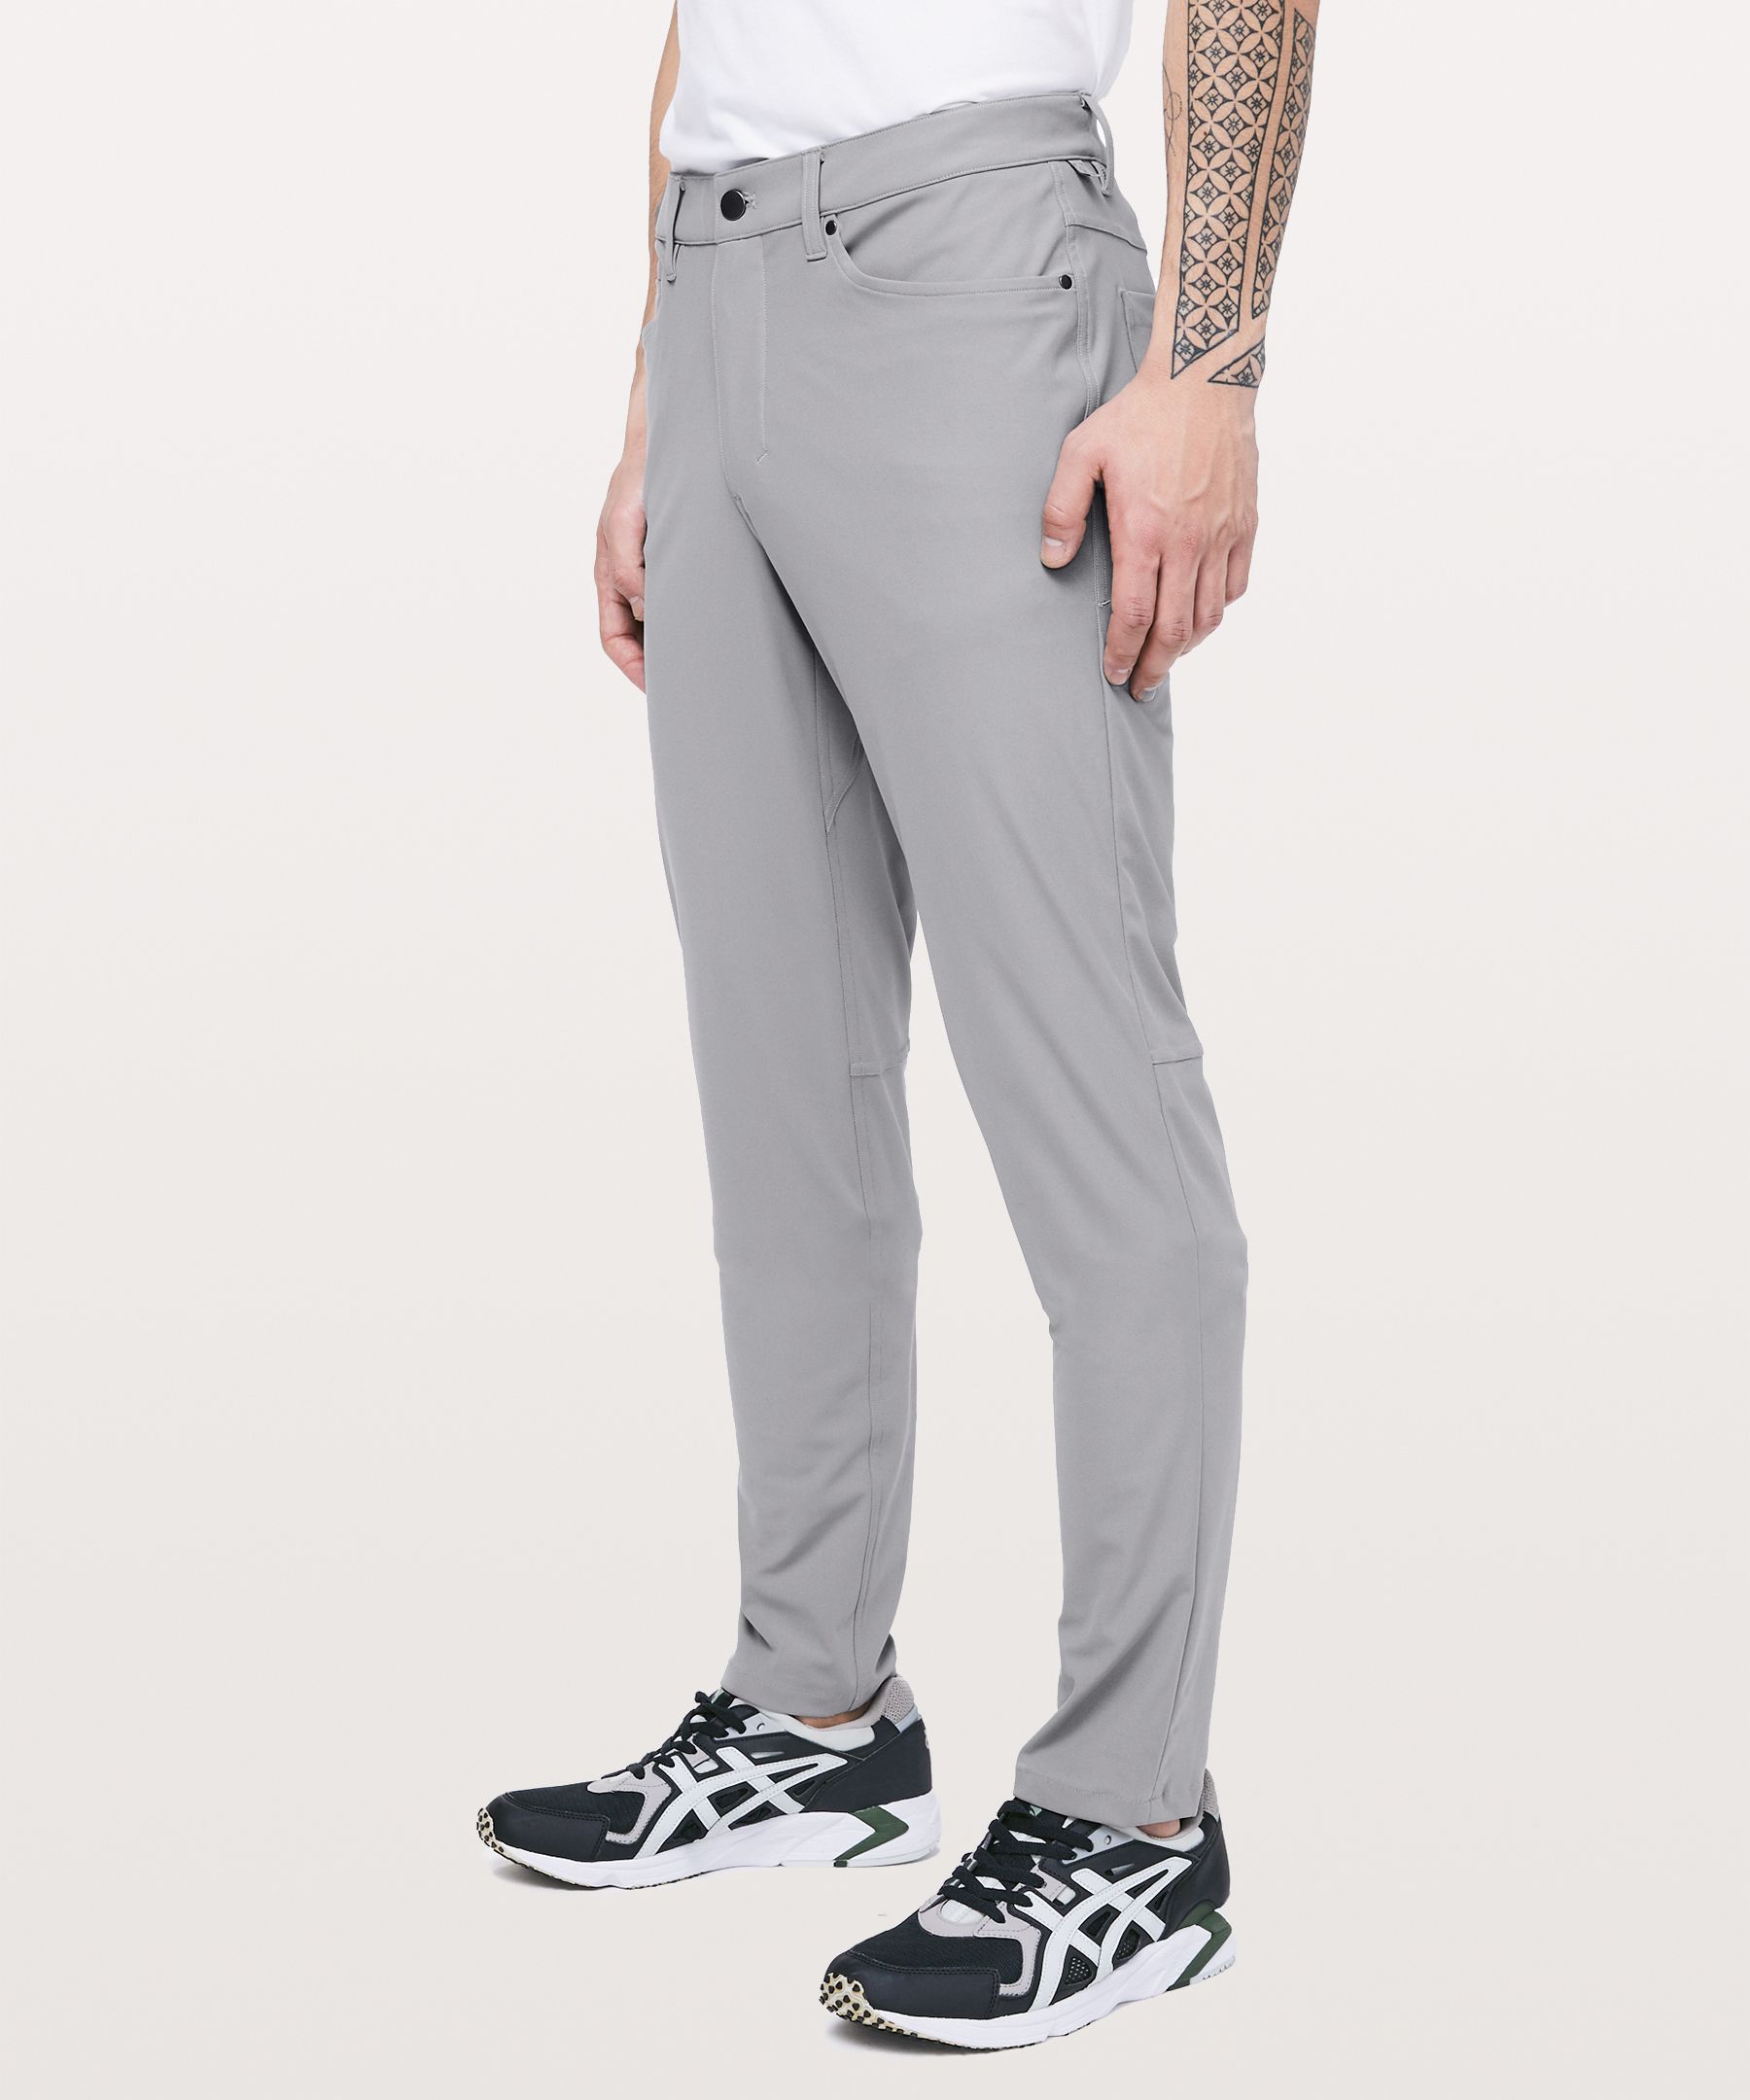 lululemon grey pants